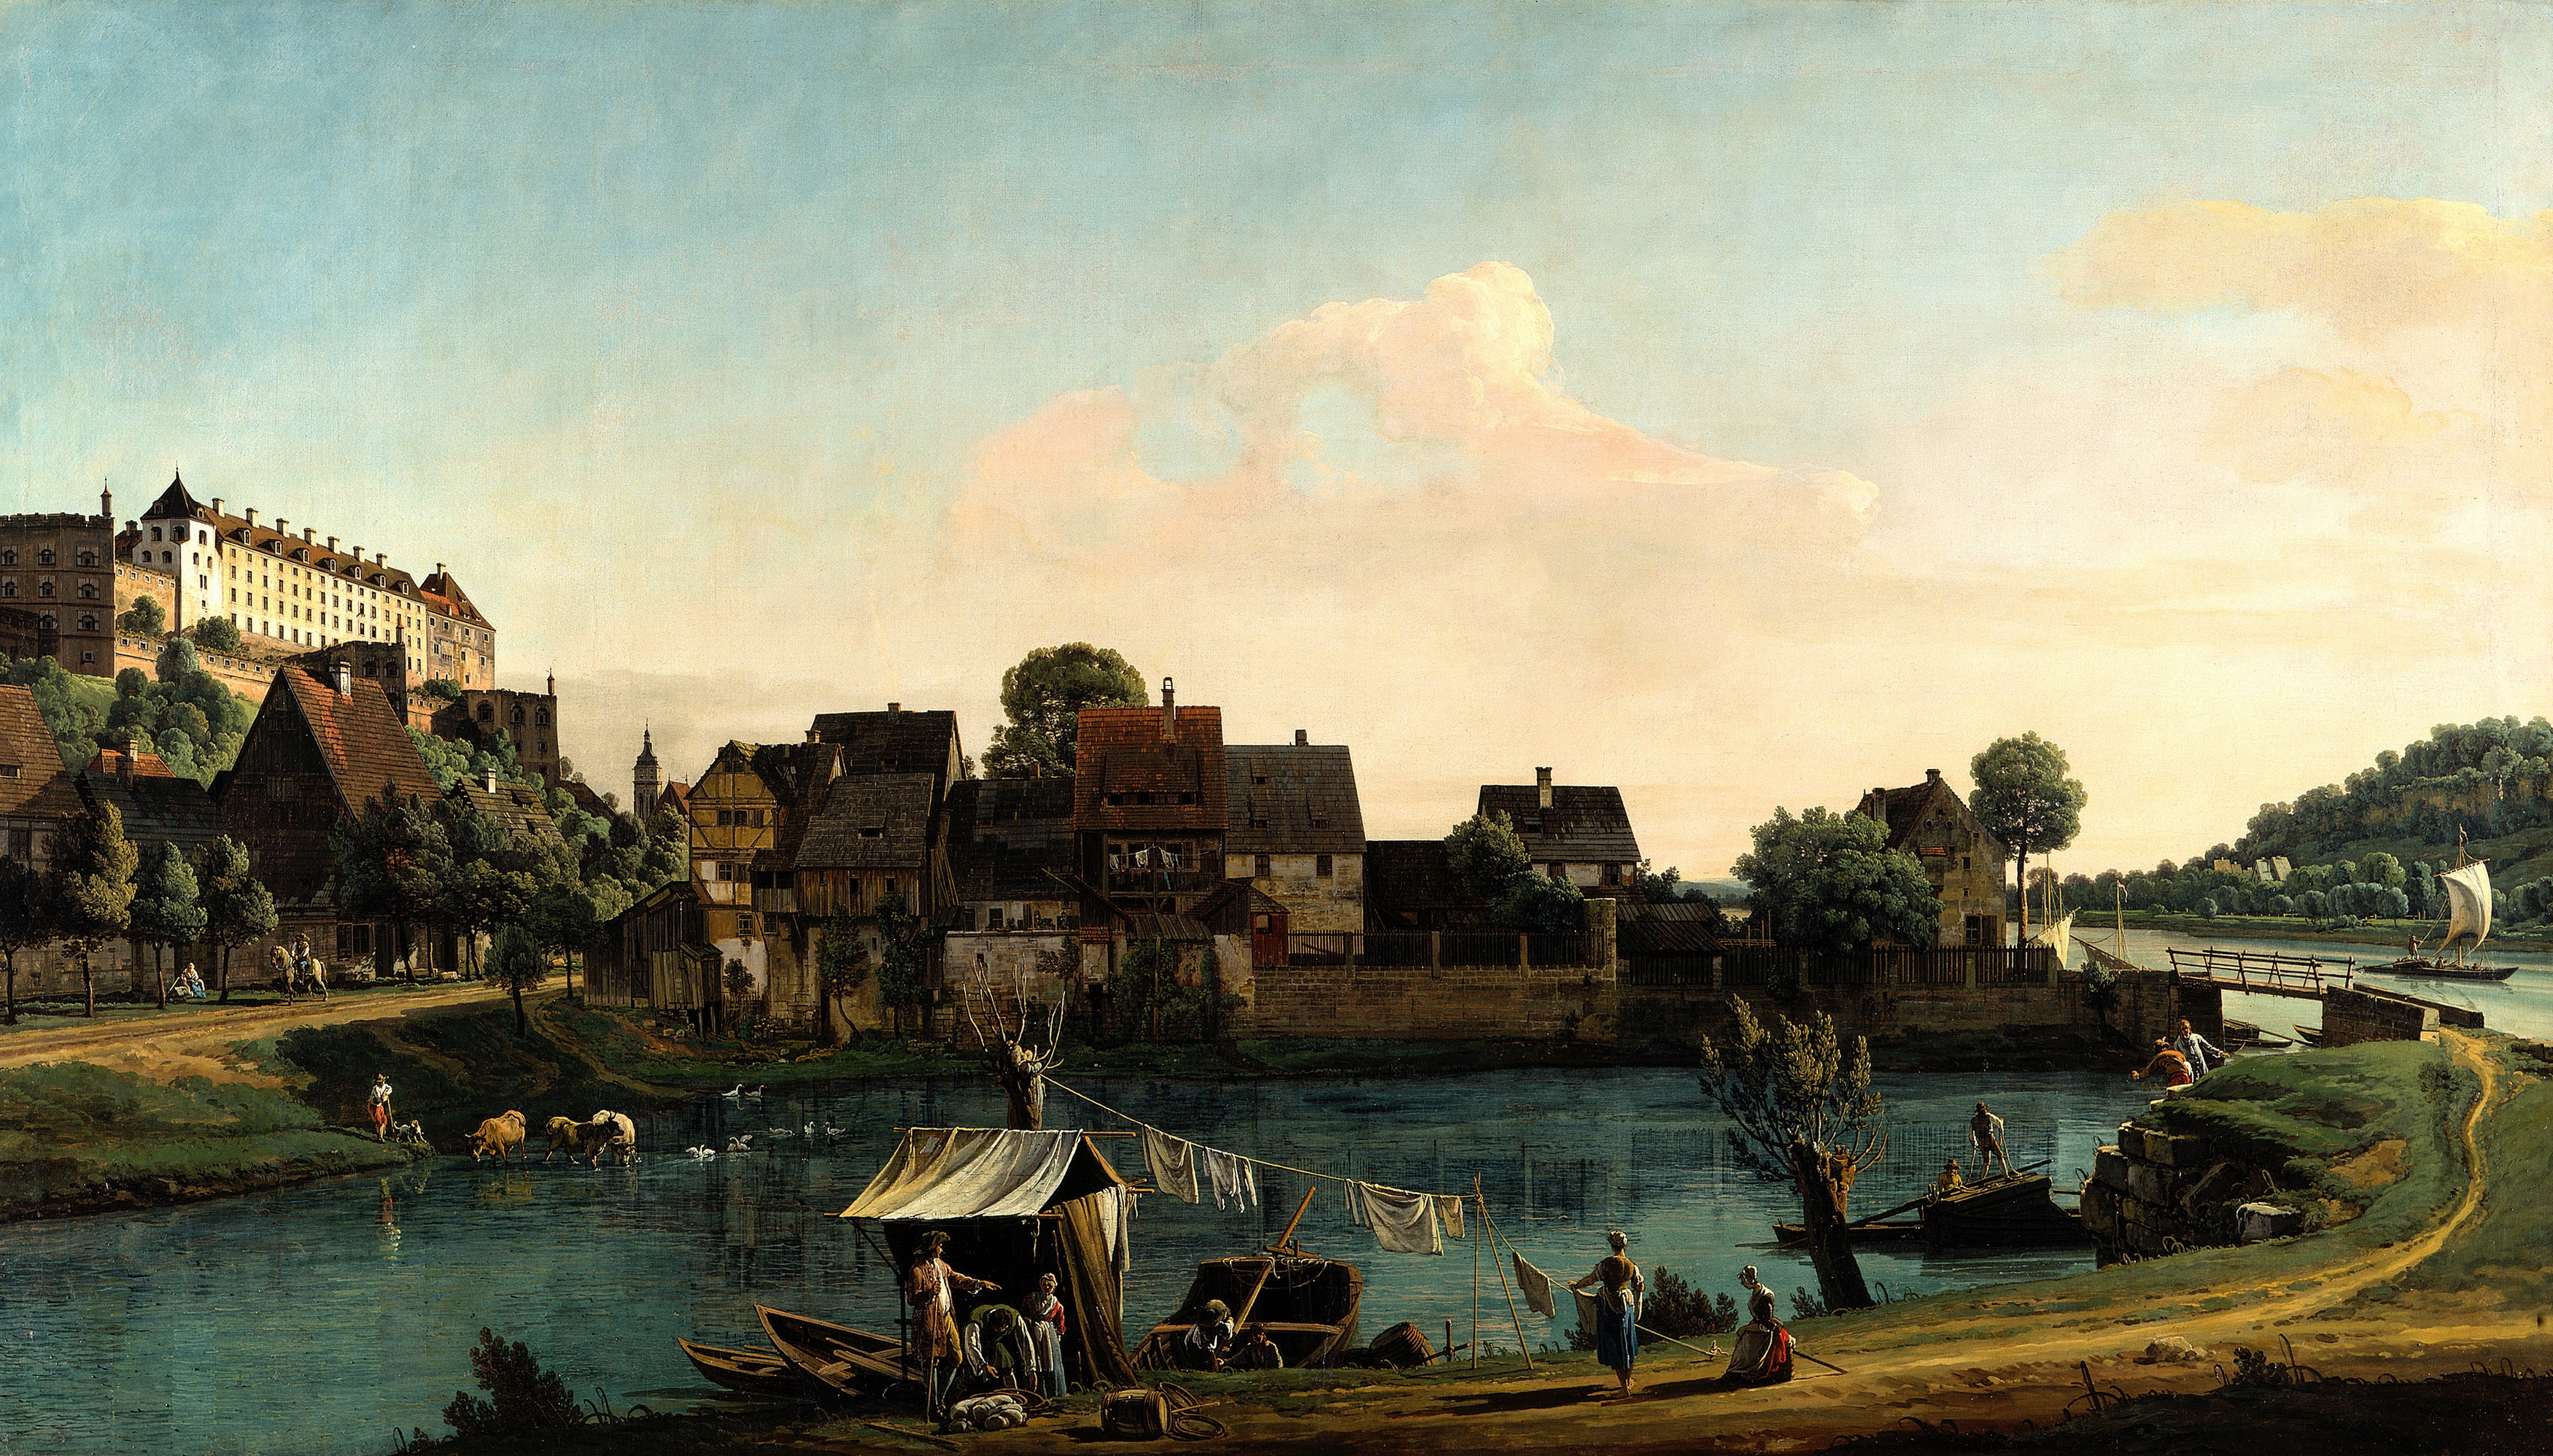 Bernardo Bellotto, 'Pirna dal villaggio dei pescatori', 1753-1754, olio su tela. Dresda, Gemäldegalerie Alte Meister (Scala'Bpk)